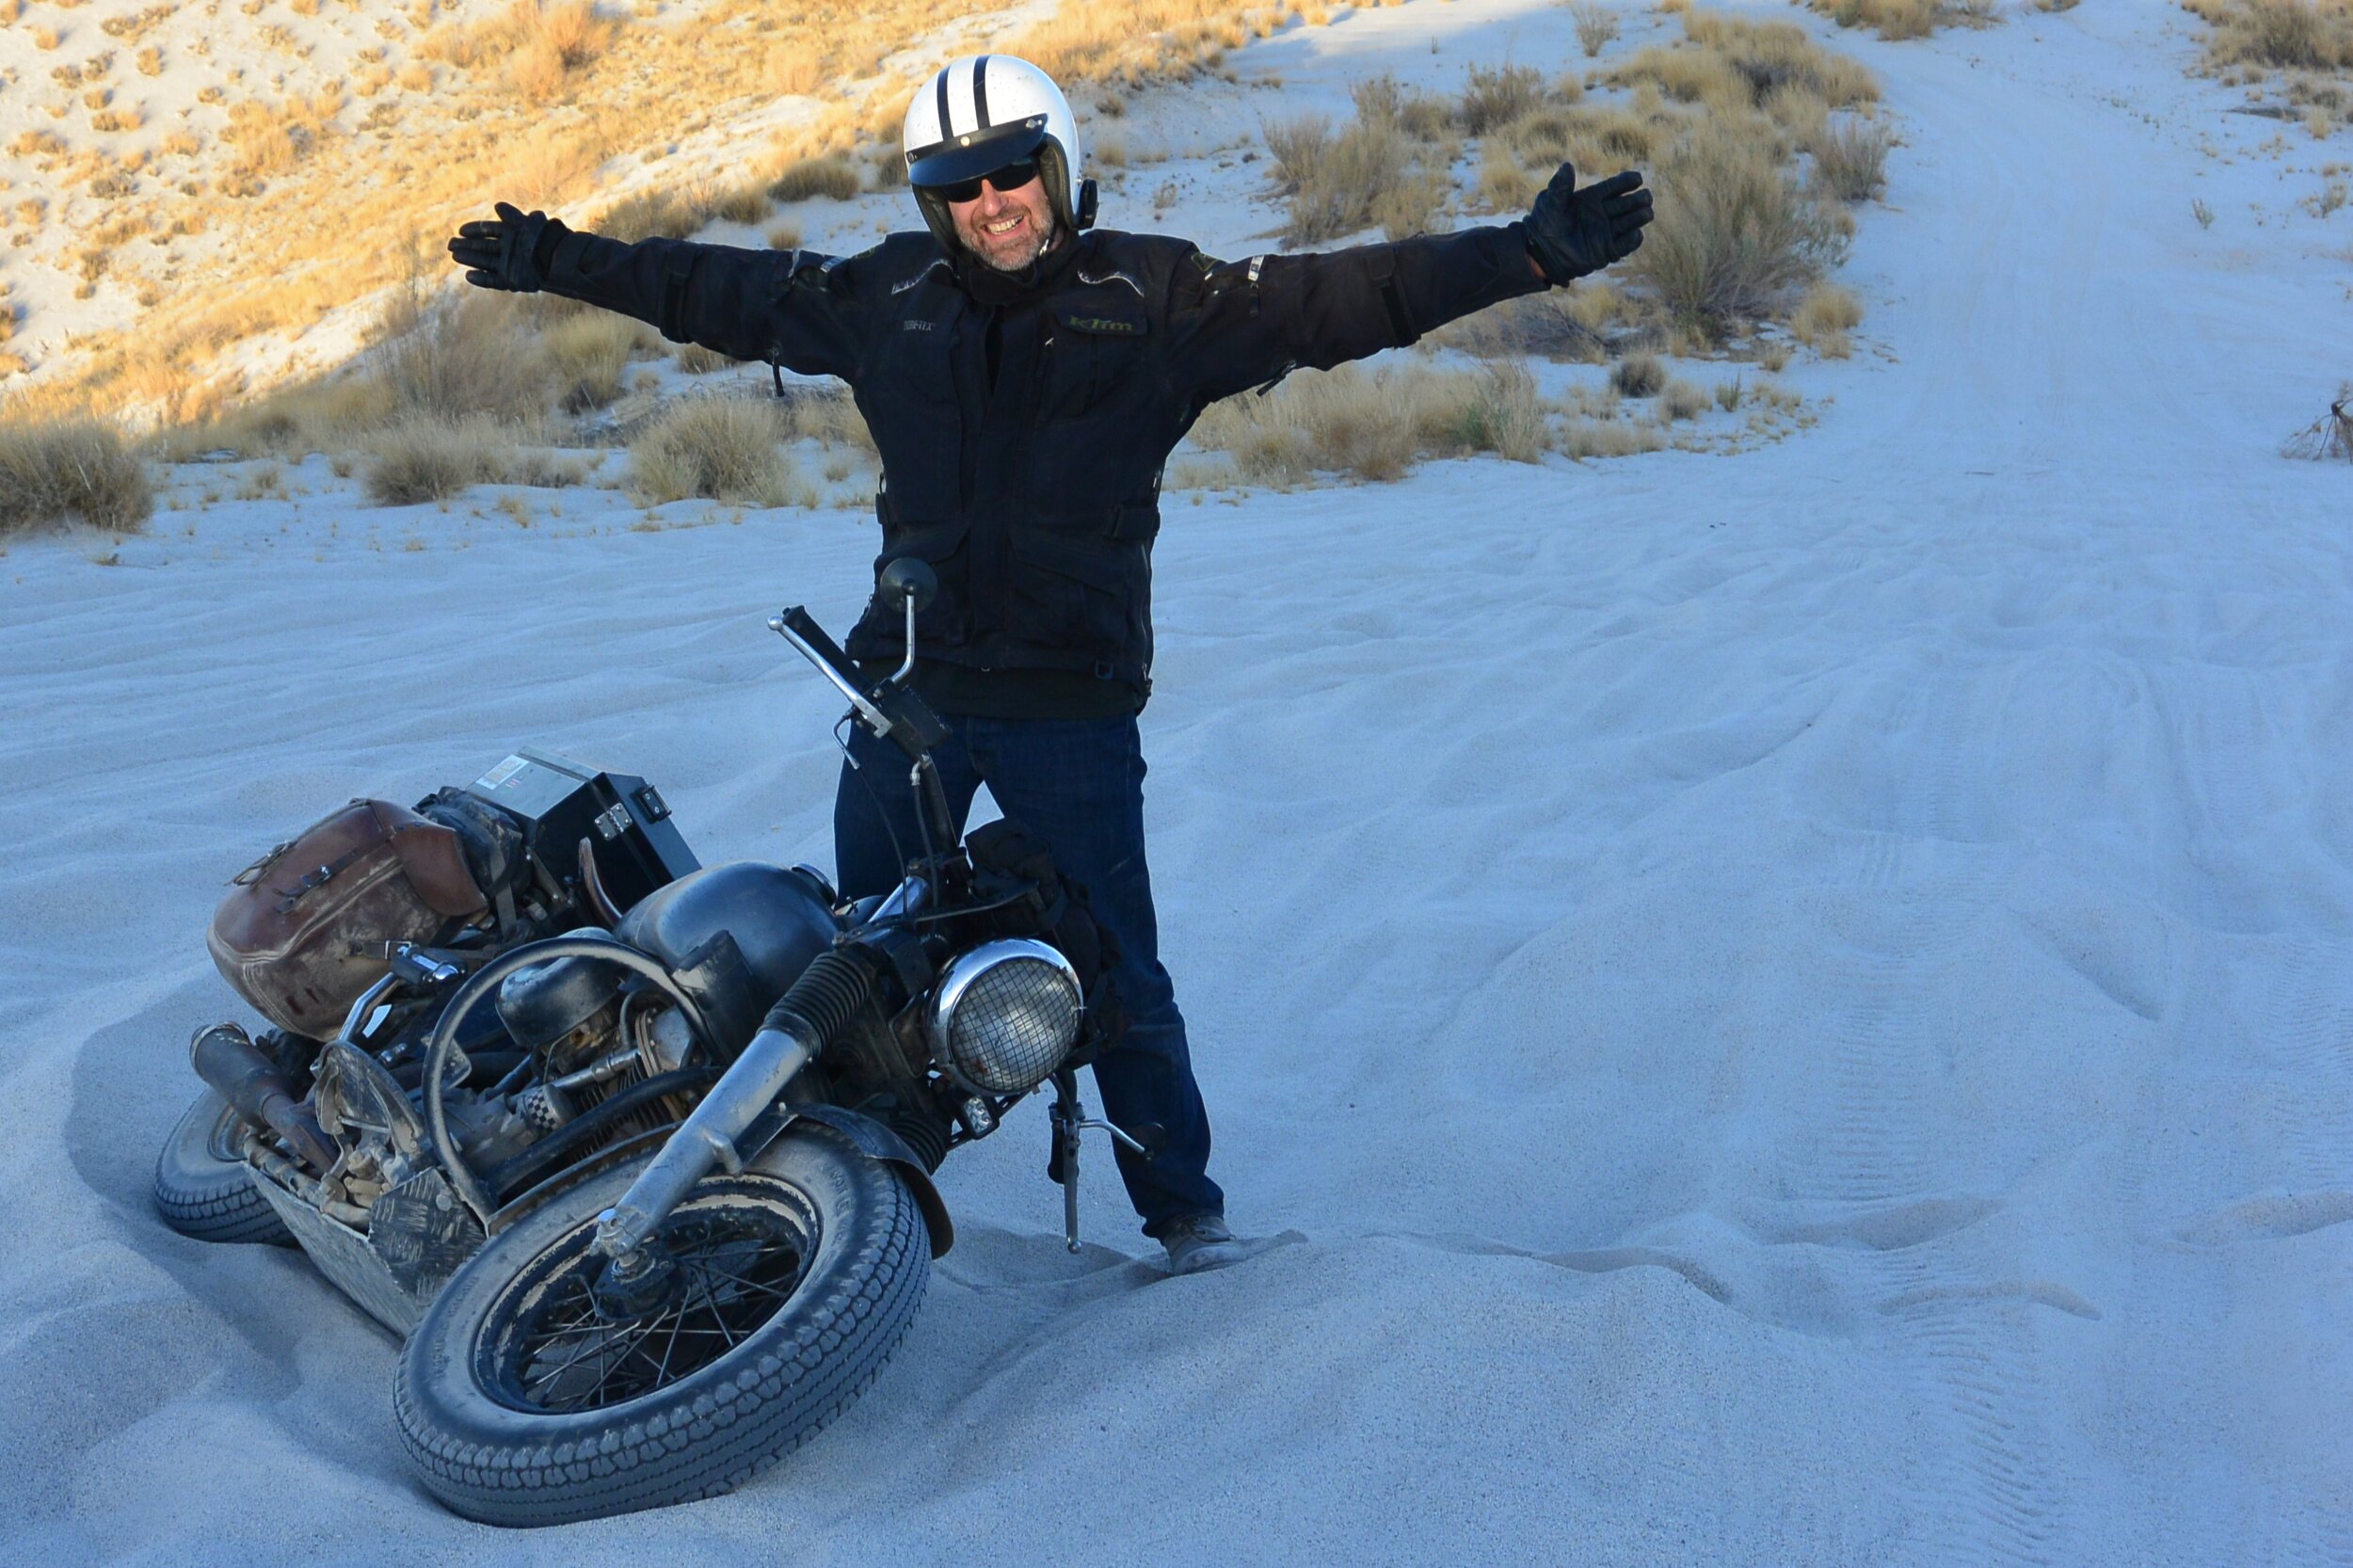 Gareth-Jones-Africa-Adventure-Rider-Radio-Motorcycle-Podcast-5.jpg